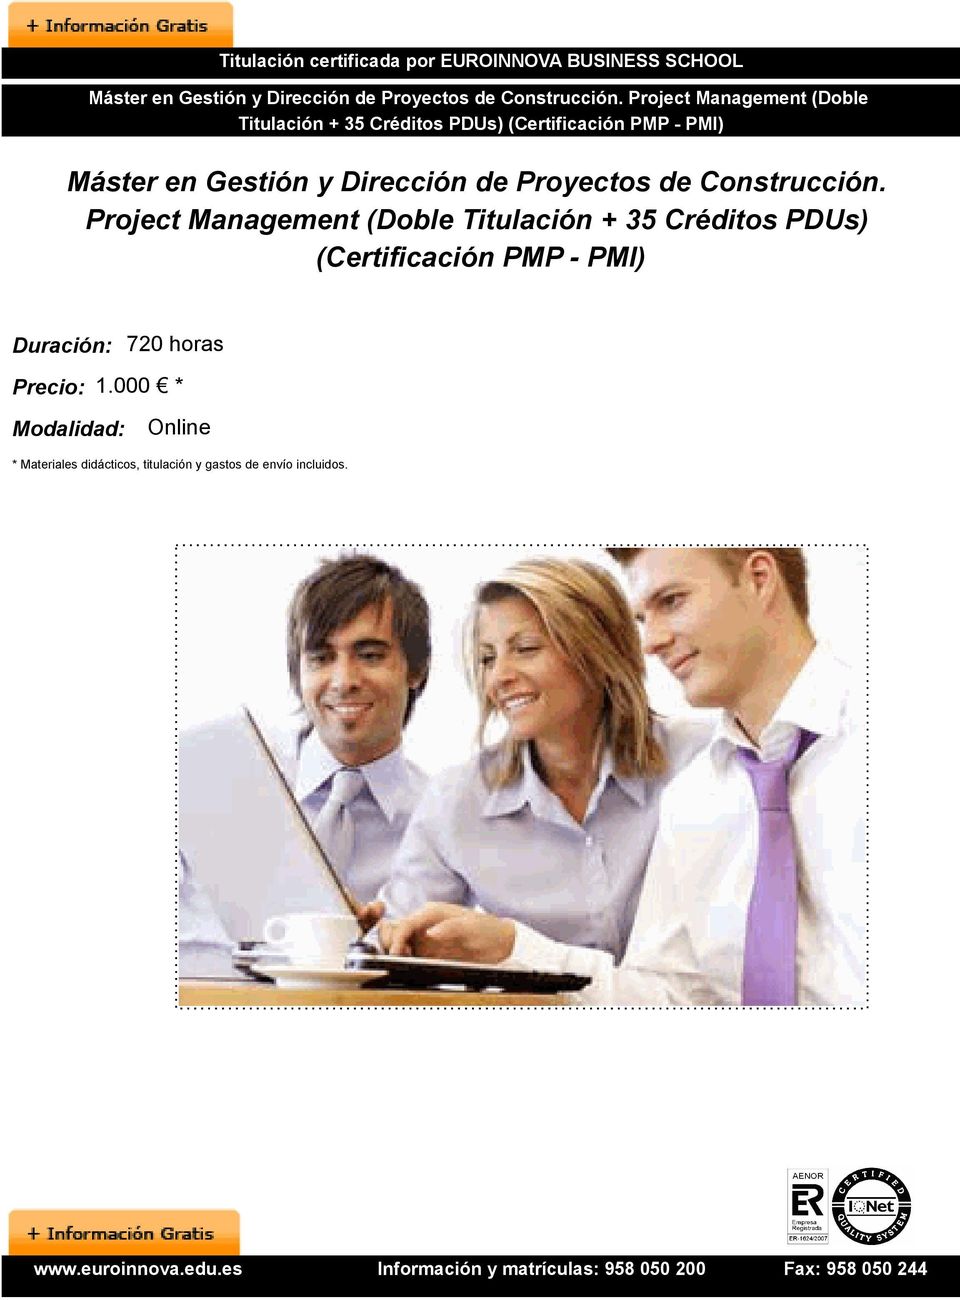 Project Management (Doble Titulación + 35 Créditos PDUs) (Certificación PMP - PMI) Duración: 720